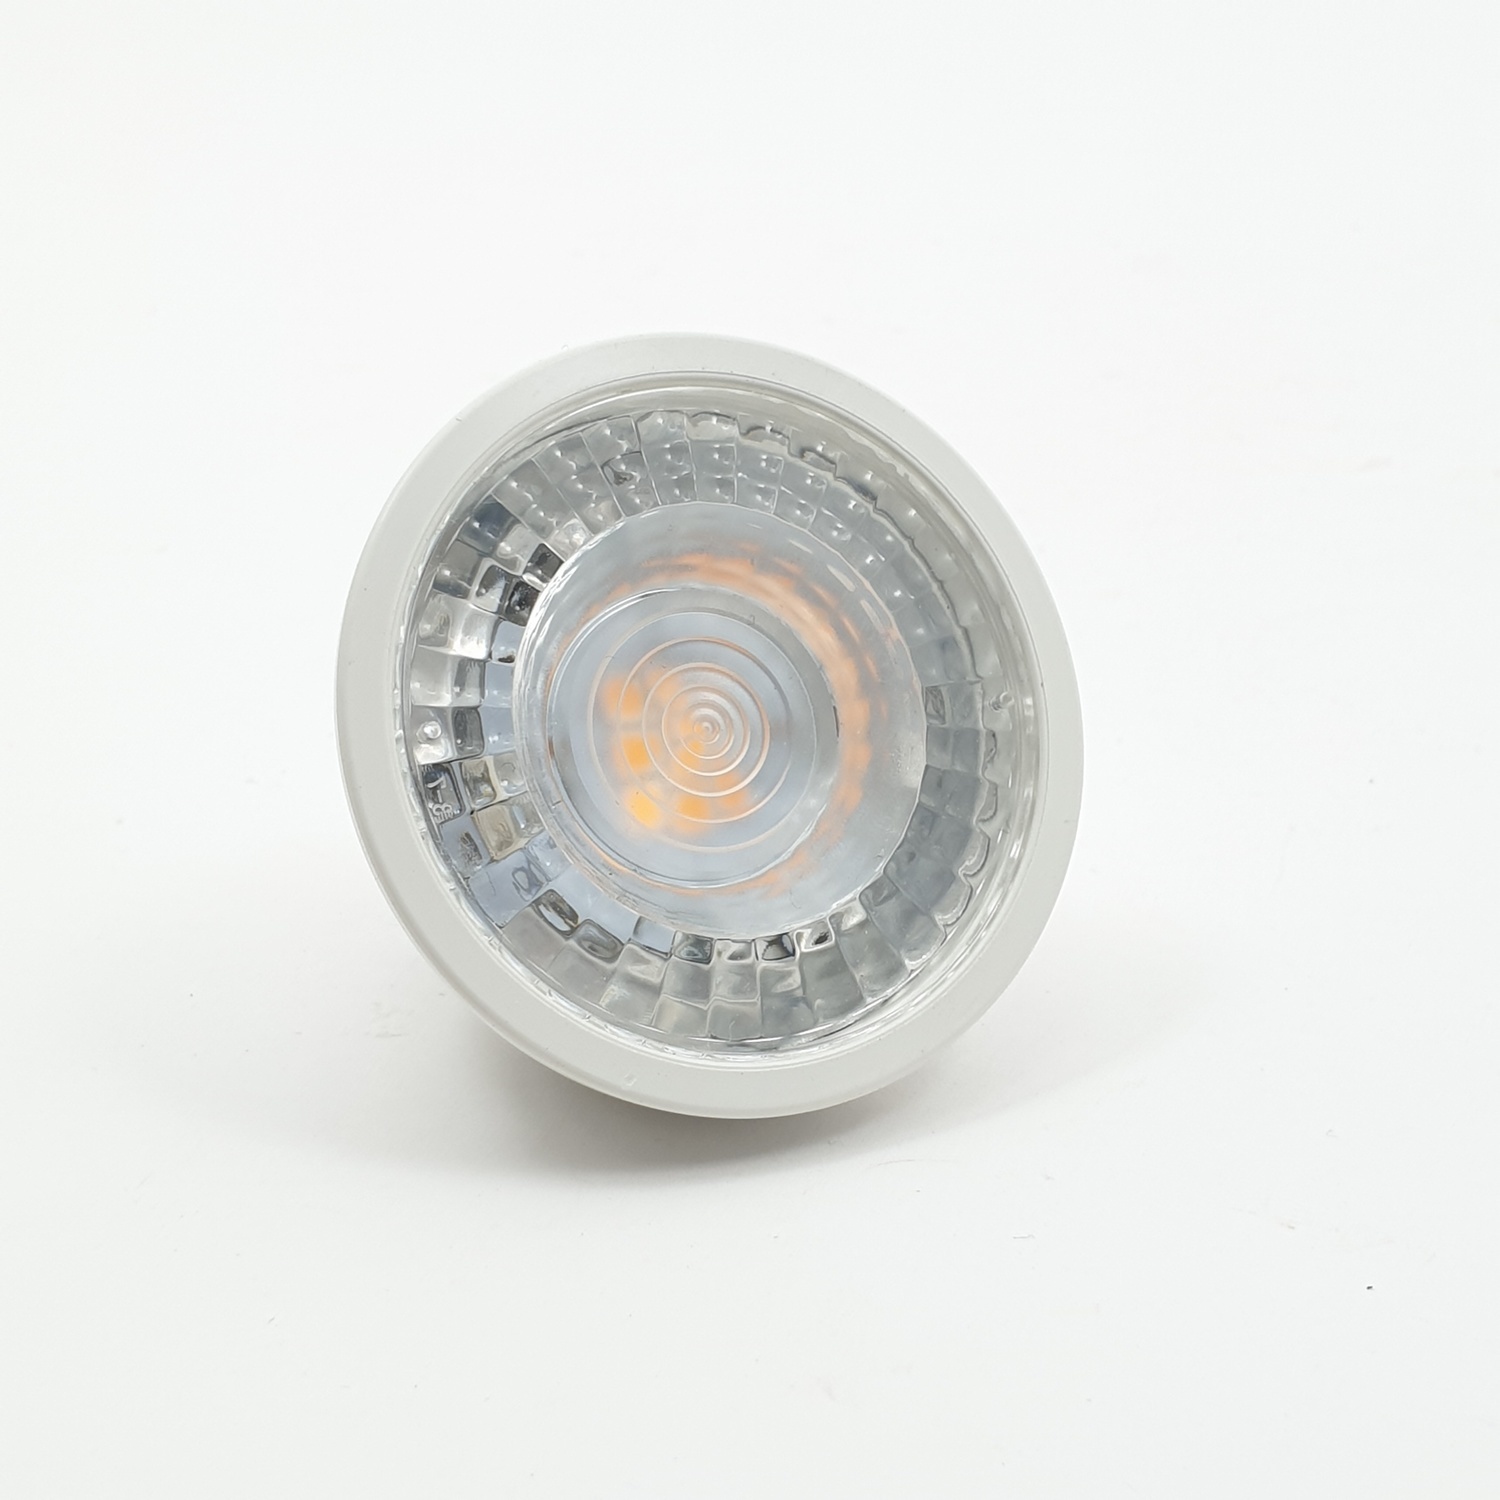 LAMPTAN หลอด LED MR16 6W 220V แสงวอร์มไวท์ รุ่นโคเมต GU 5.3